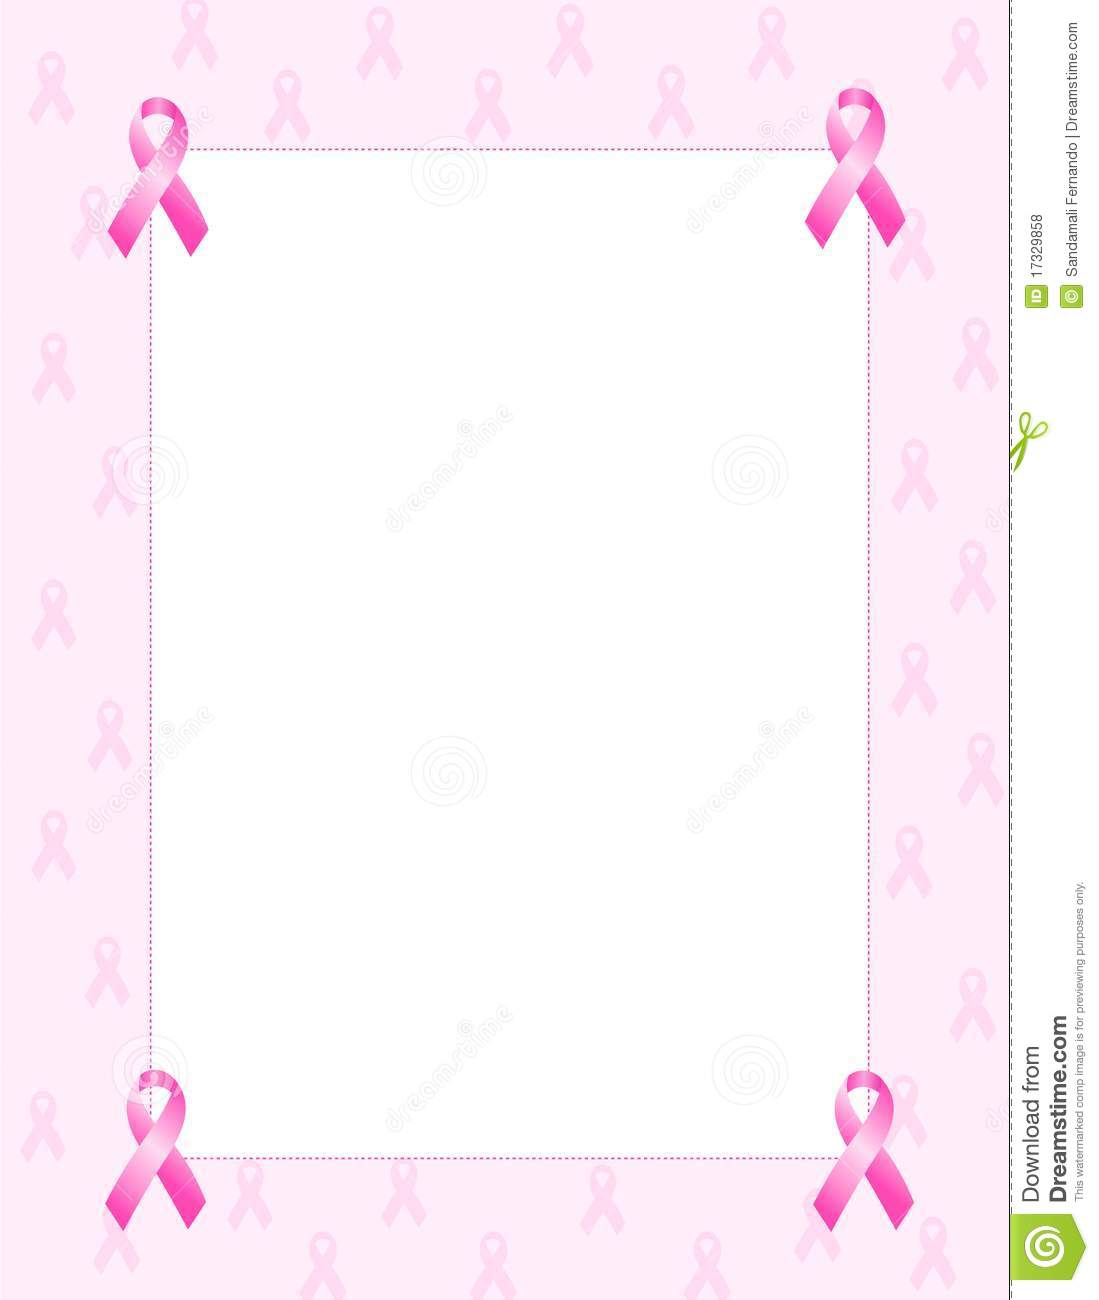 Cancer Awareness Ribbons Background   Border  Cute Pink Ribbons Frame